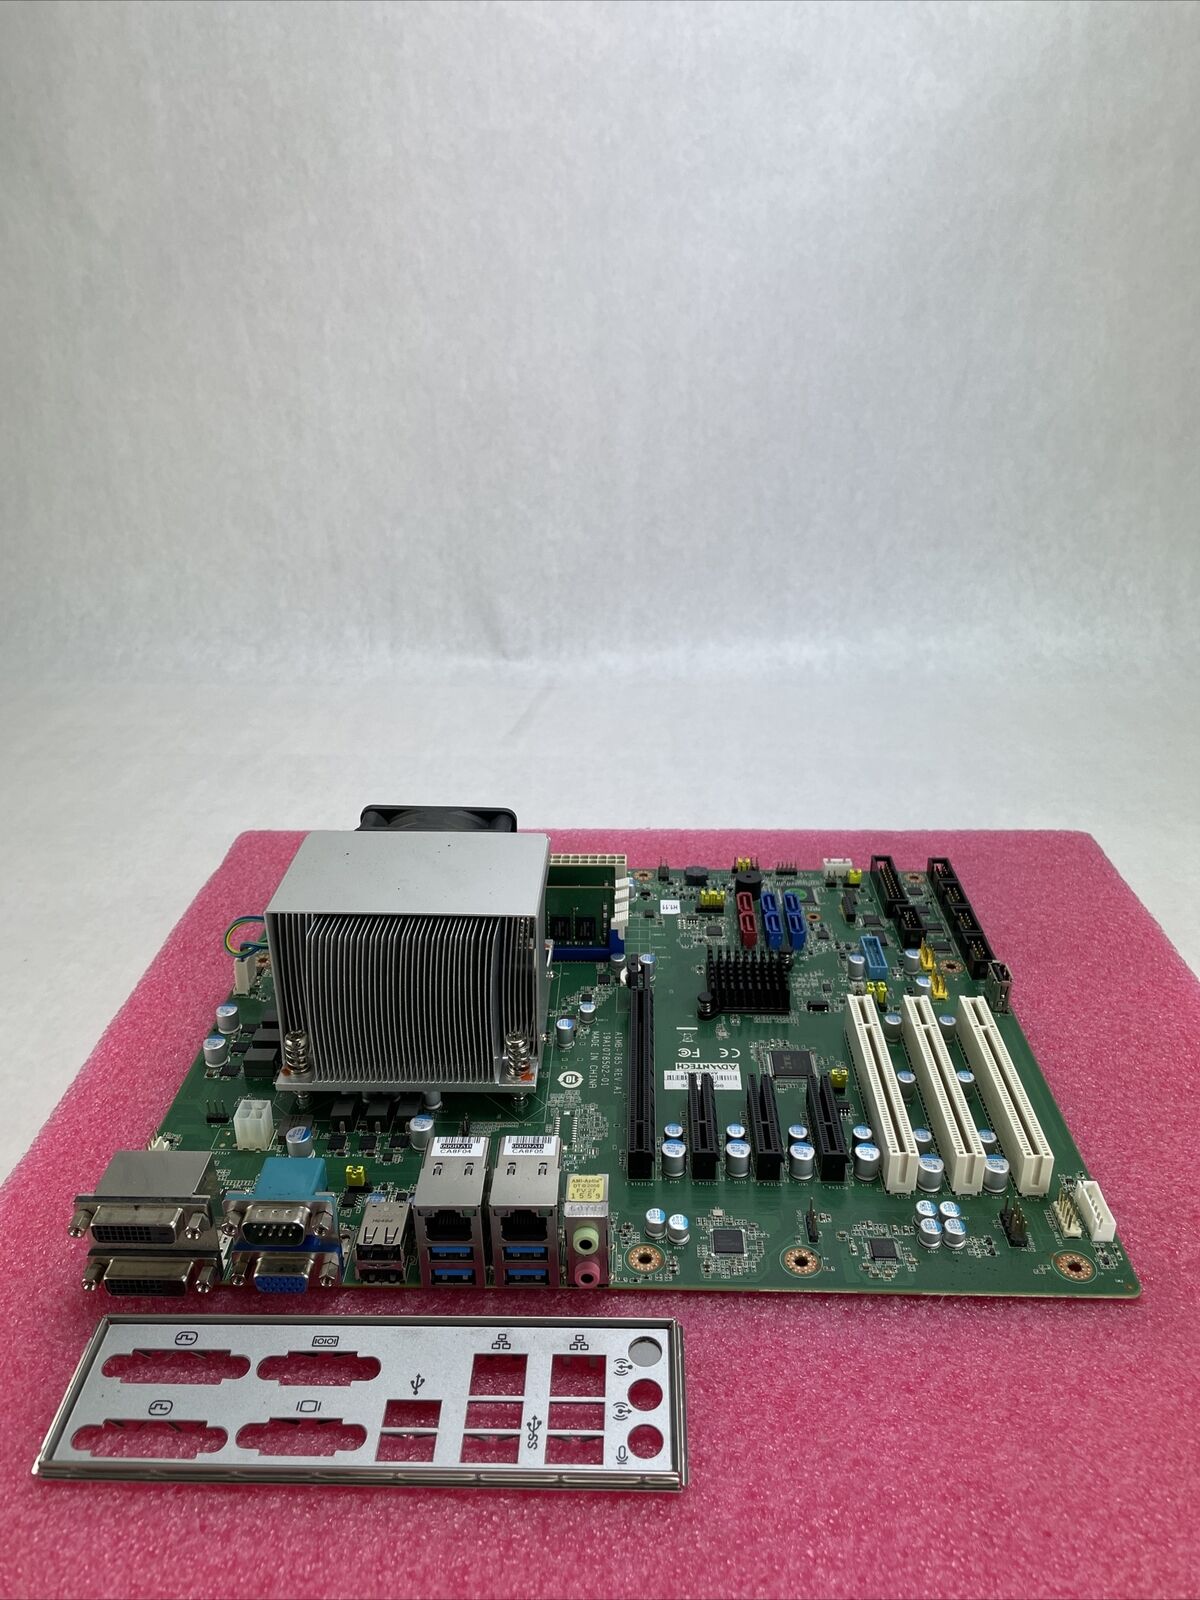 Advantech AIMB-785 Motherboard Intel Core i7-6700K 4GHz 16GB RAM w/Shield